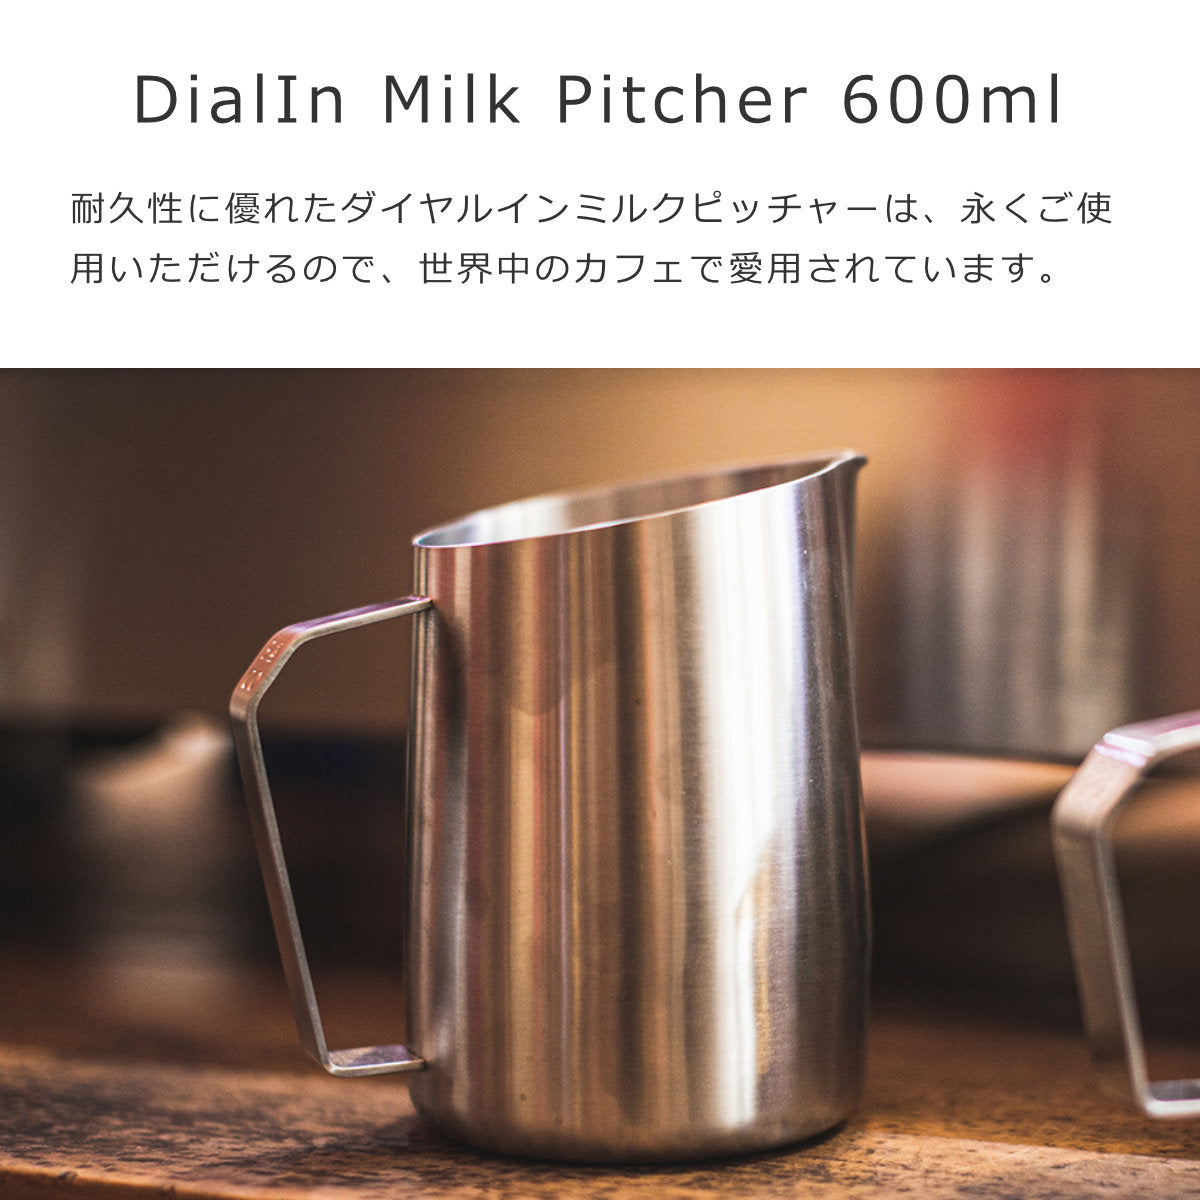 Dial In Milk Pitcher 600ml ダイヤルインミルクピッチャー